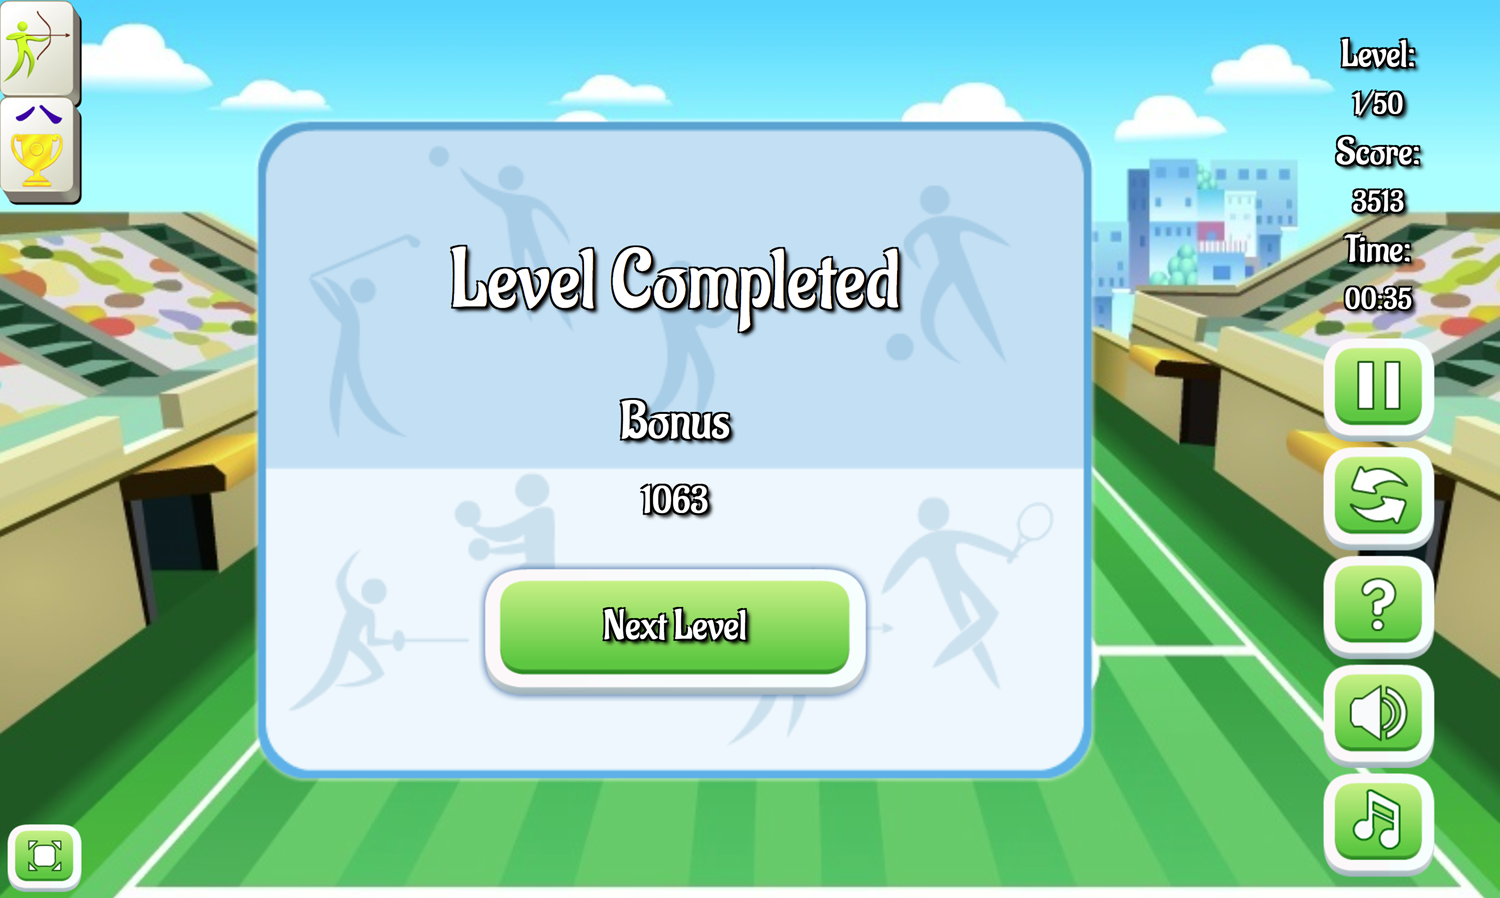 Sports Mahjong Game Level Completed Screen Screenshot.